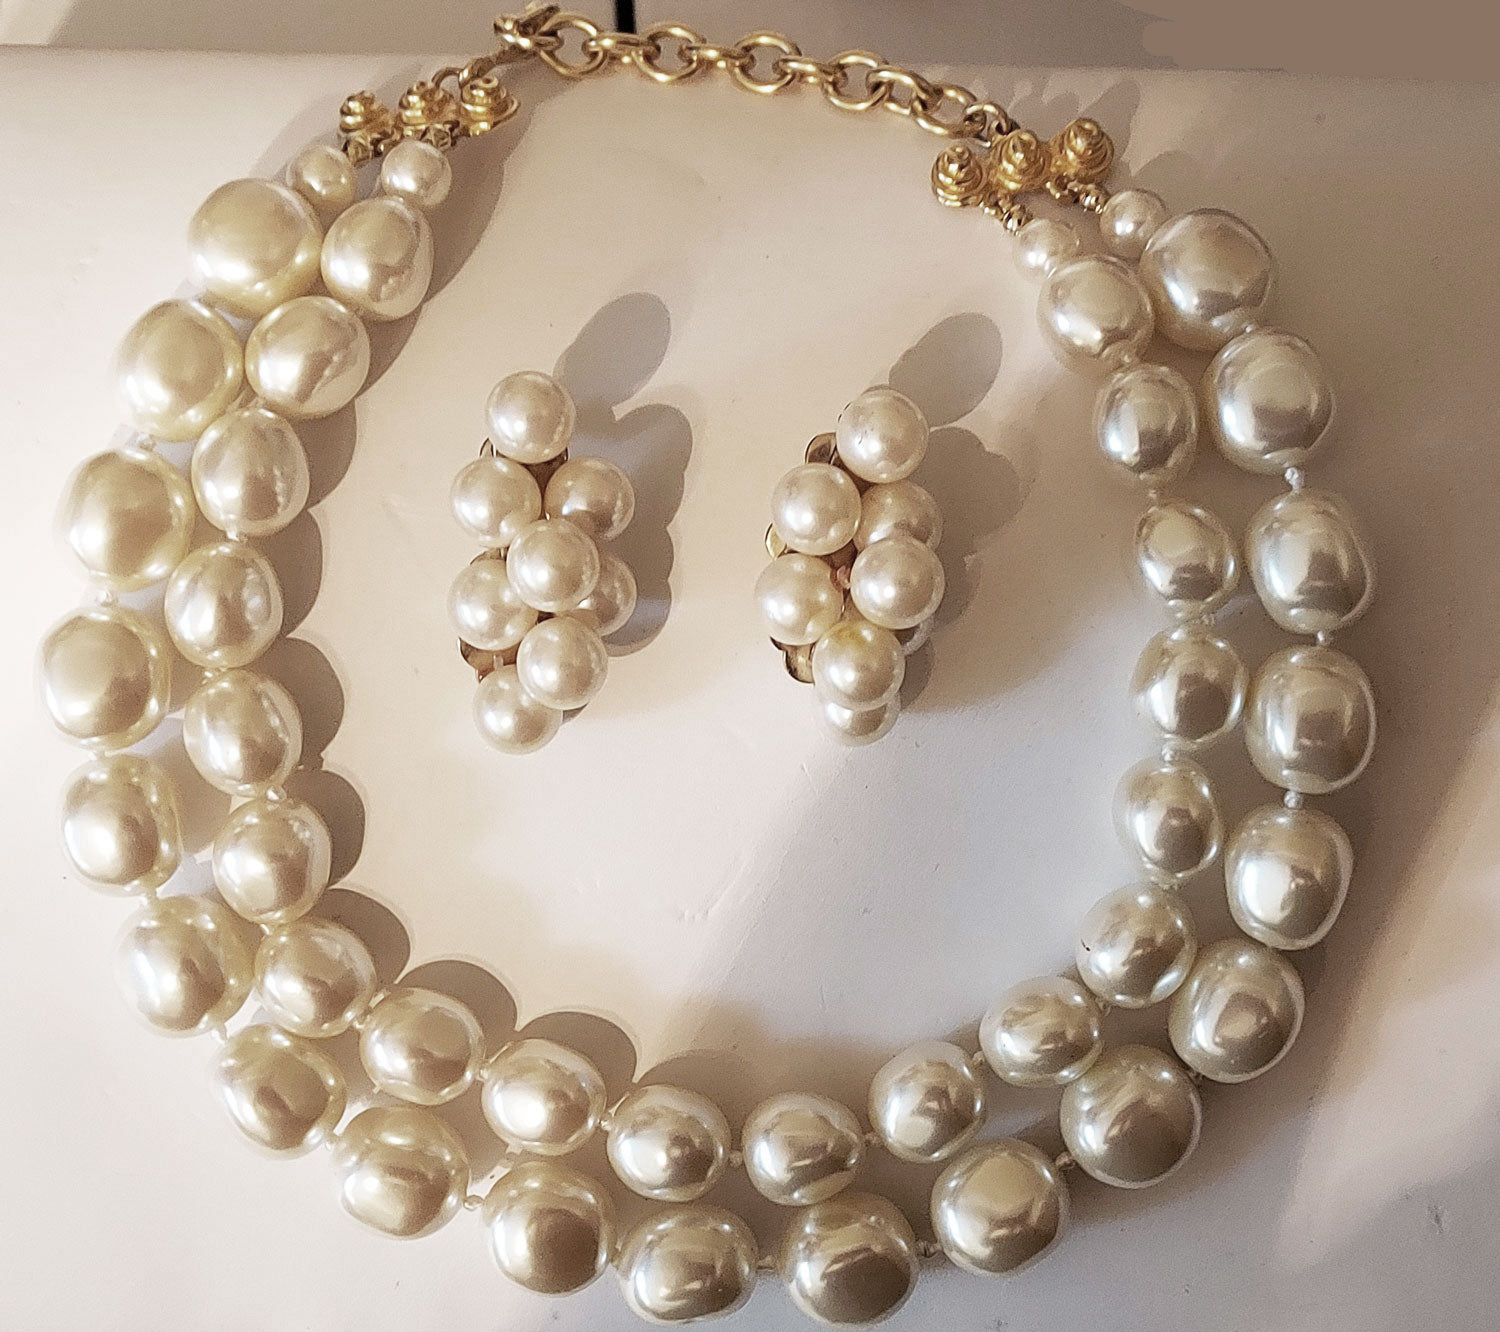 Buy Sri Jagdamba Pearls Pahal 2 Lines Pearl Necklace Set at Amazon.in